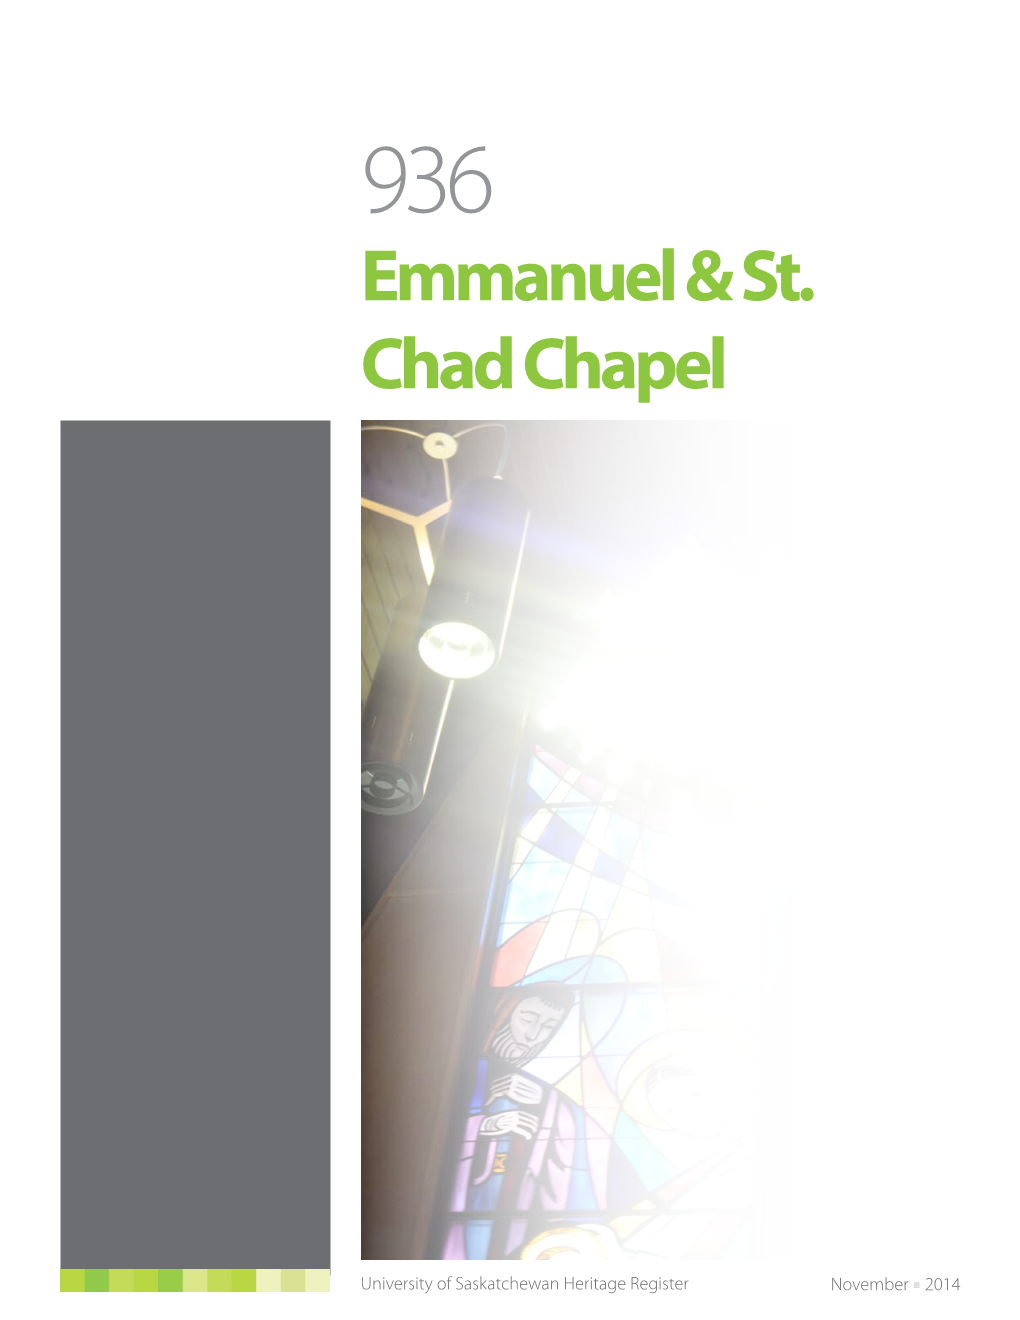 Emmanuel & St. Chad Chapel